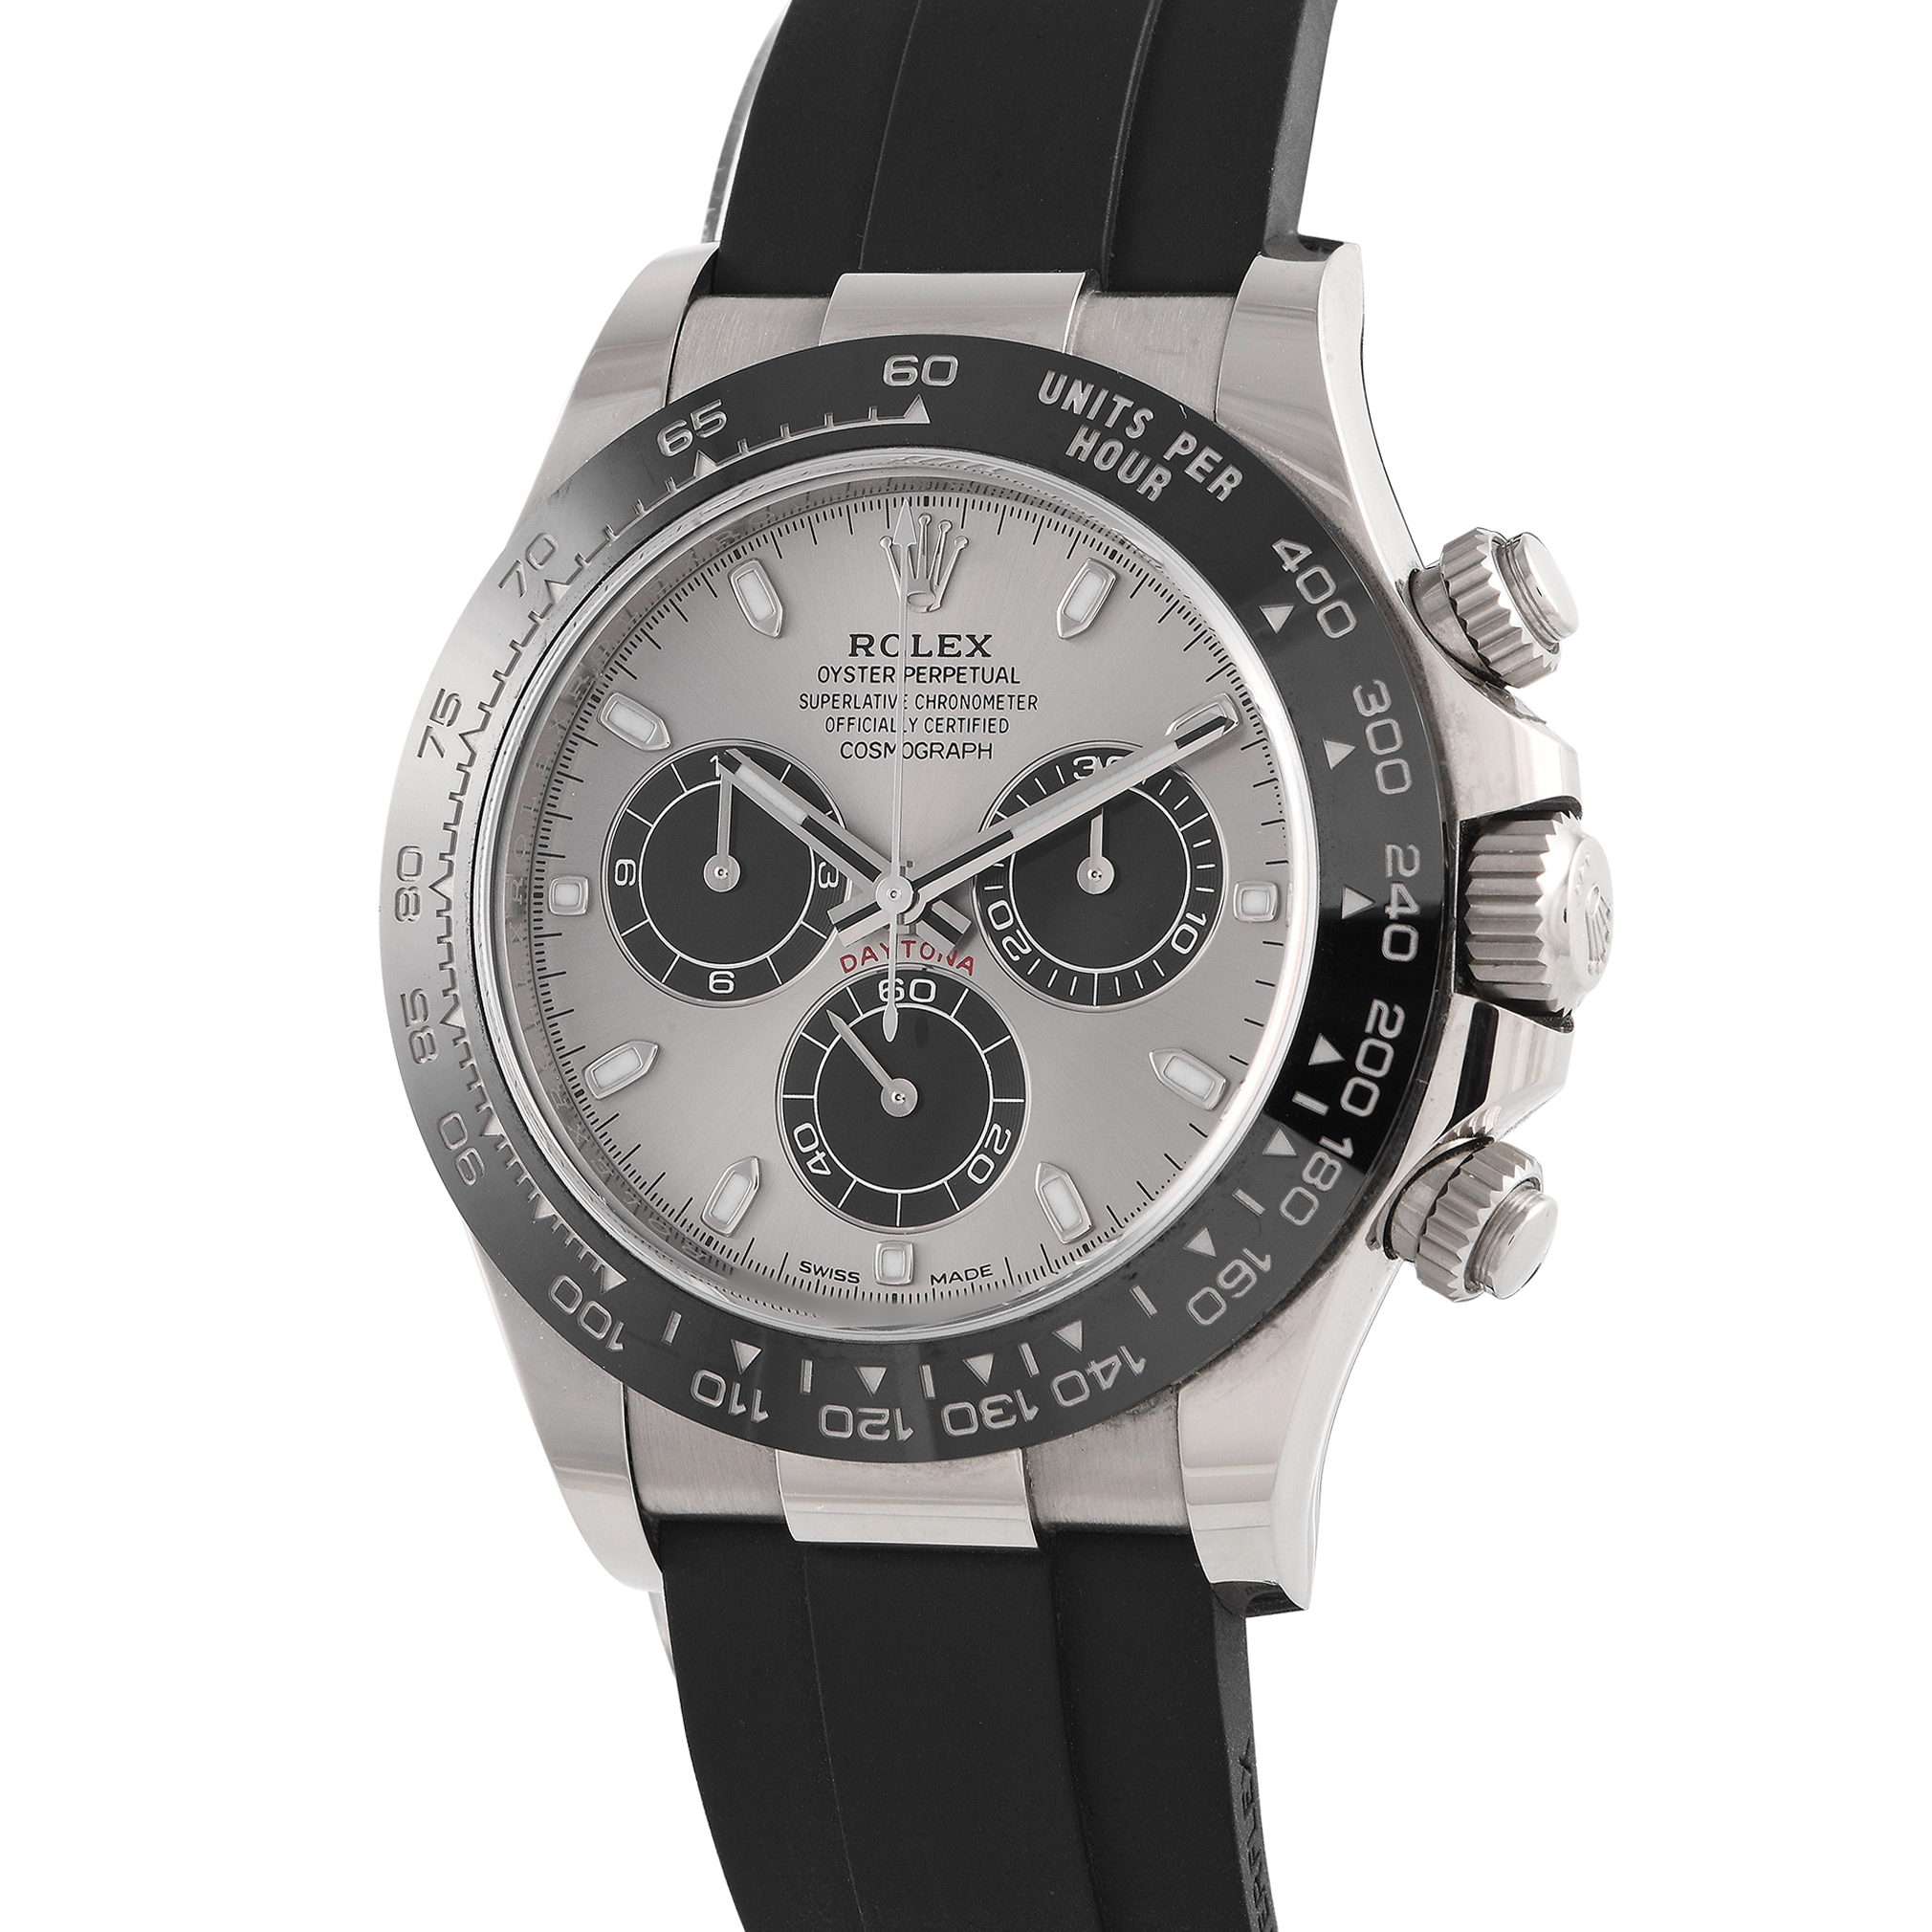 Rolex Daytona White Gold Watch 116519LN